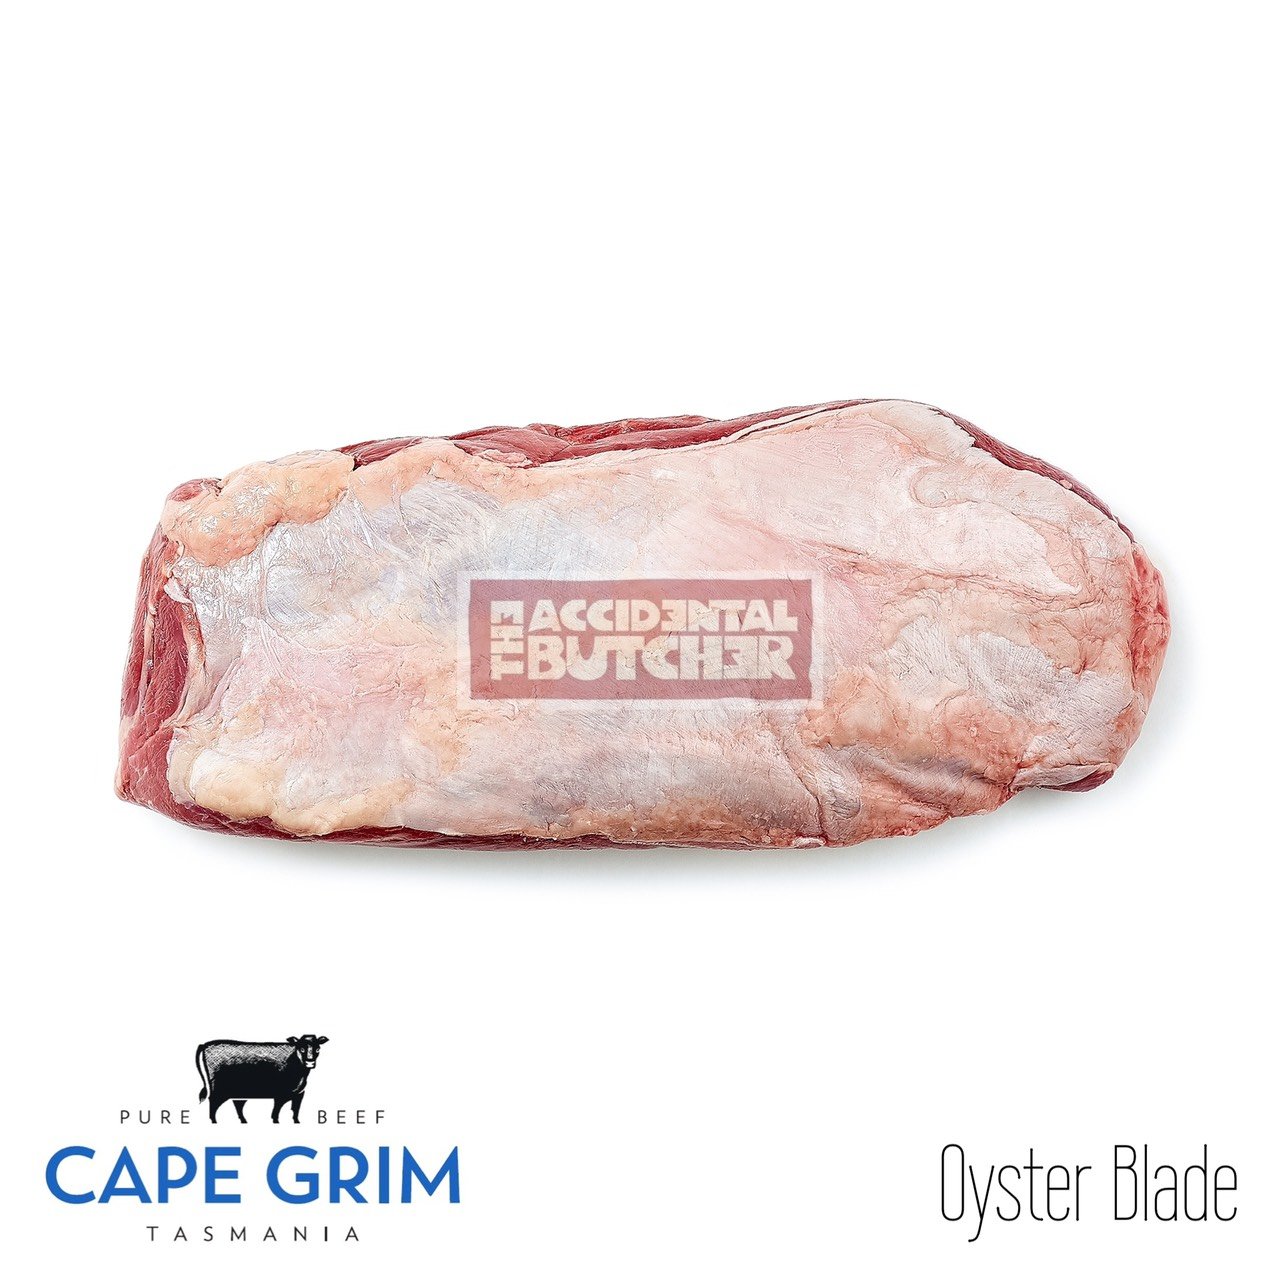 Cape Grim Oyster Blade